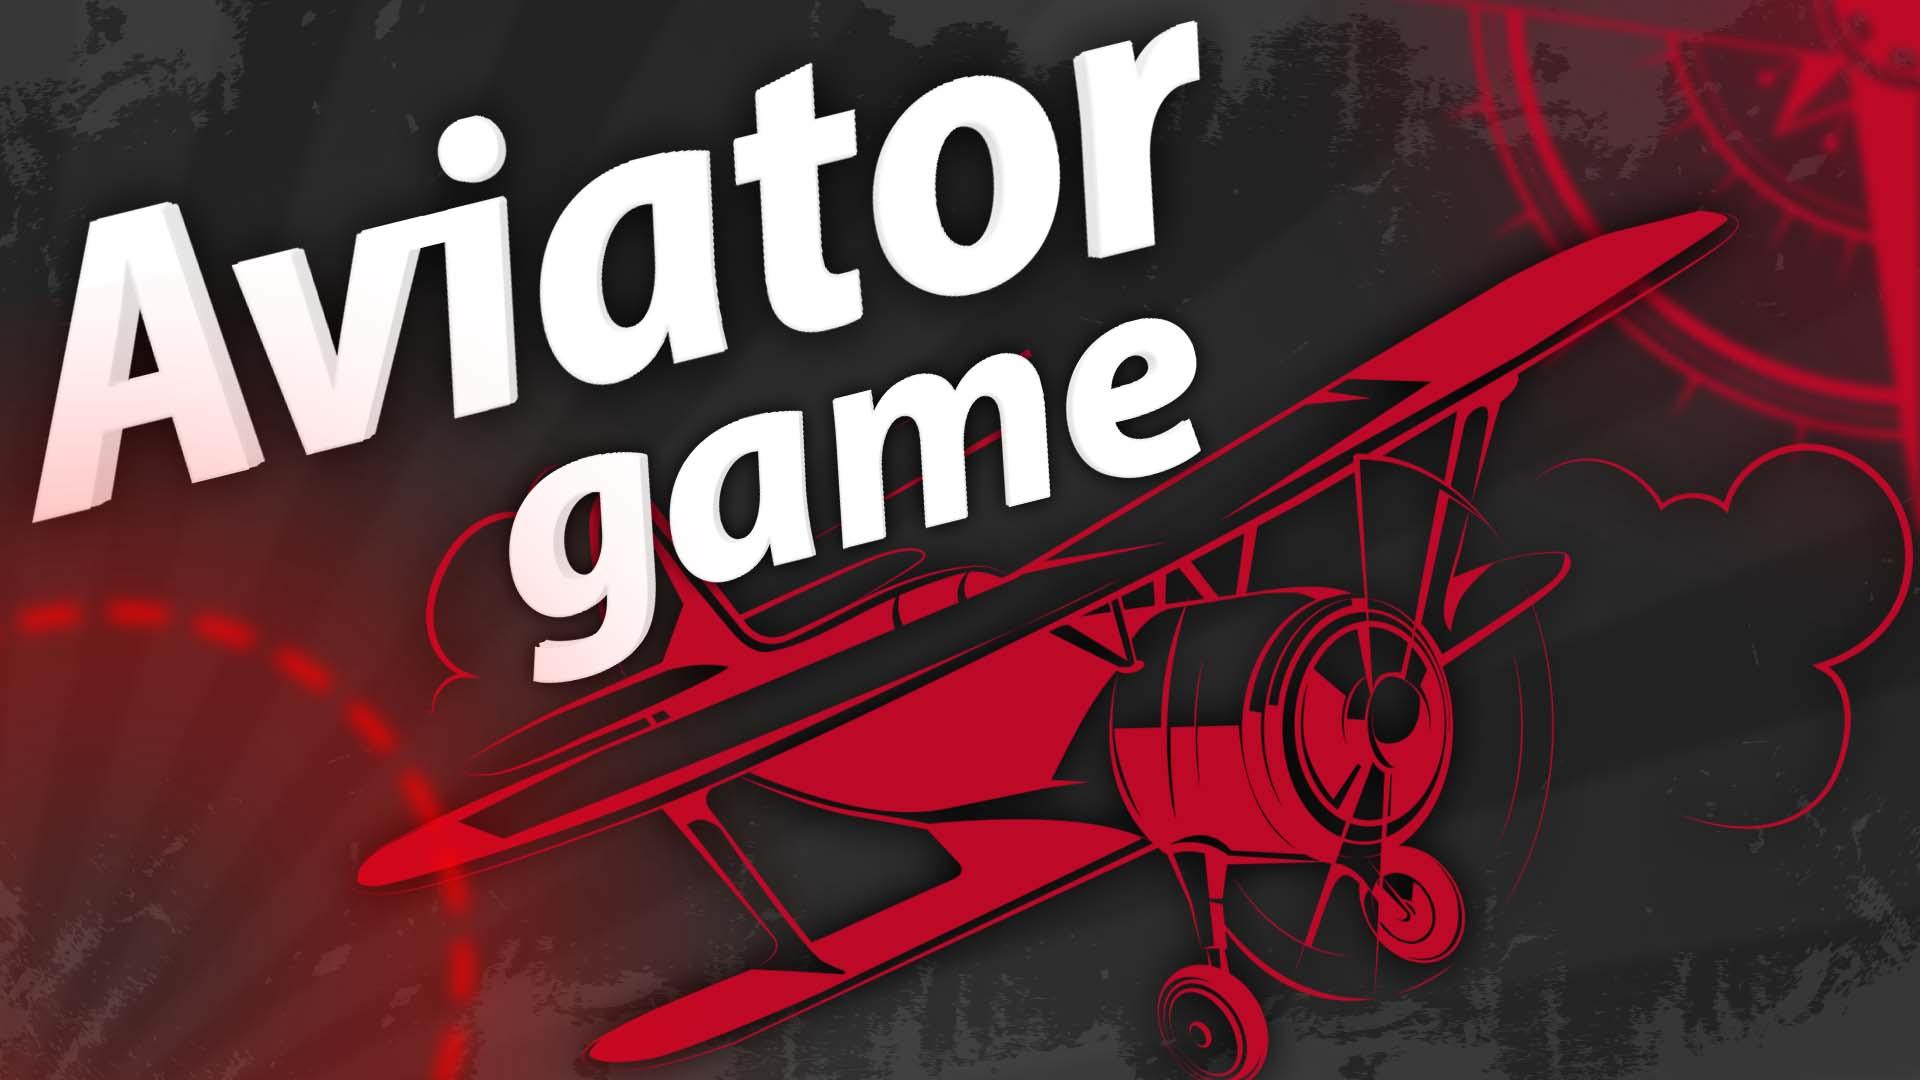 Aviator игра pinupaviator. Авиатор гейм. Aviator игра. Авиатор игра лого. Aviator Slot логотип.